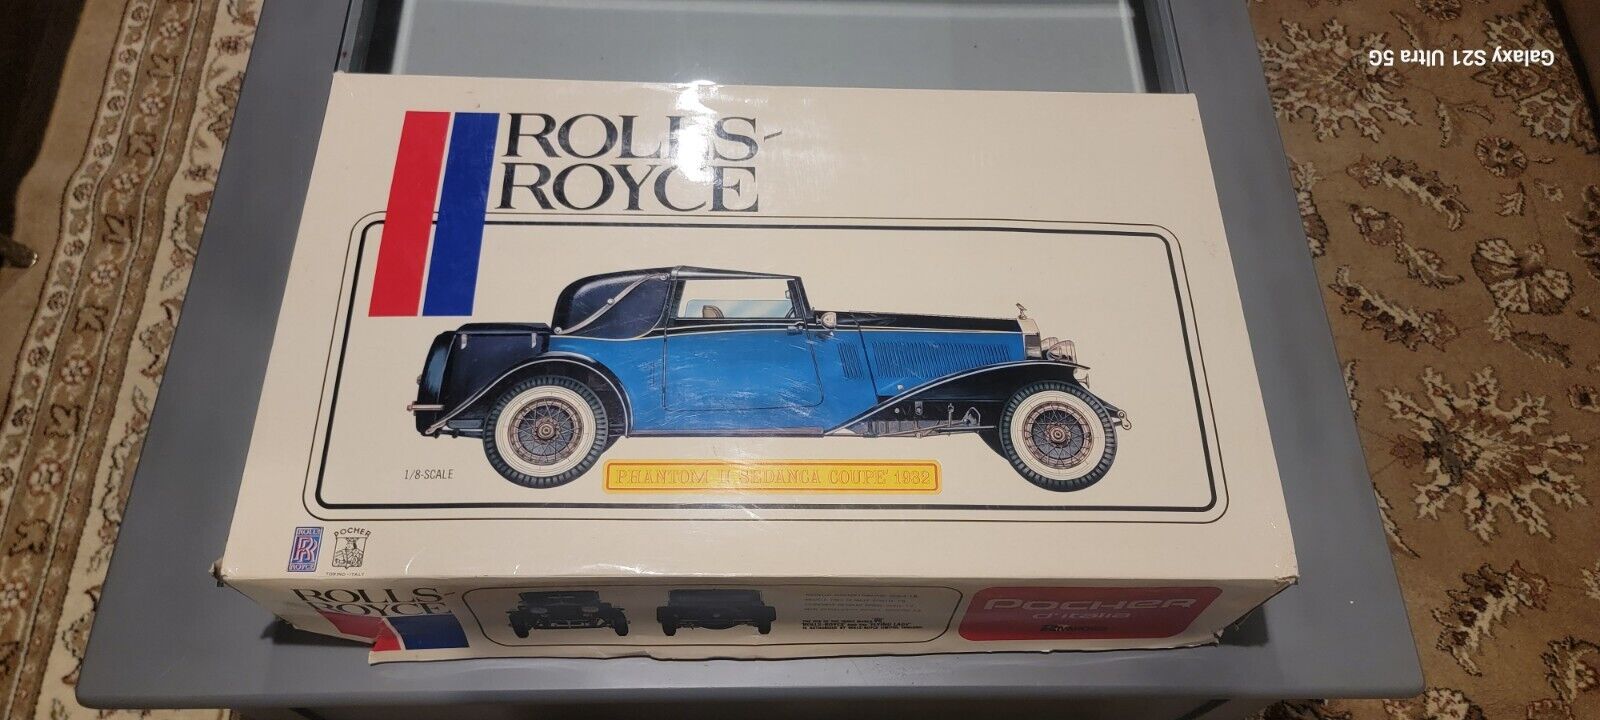 Rolls Royce 1932 Phantom ll Sedanca Coupe 1:8 Scale Pocher Tyco Model Kit